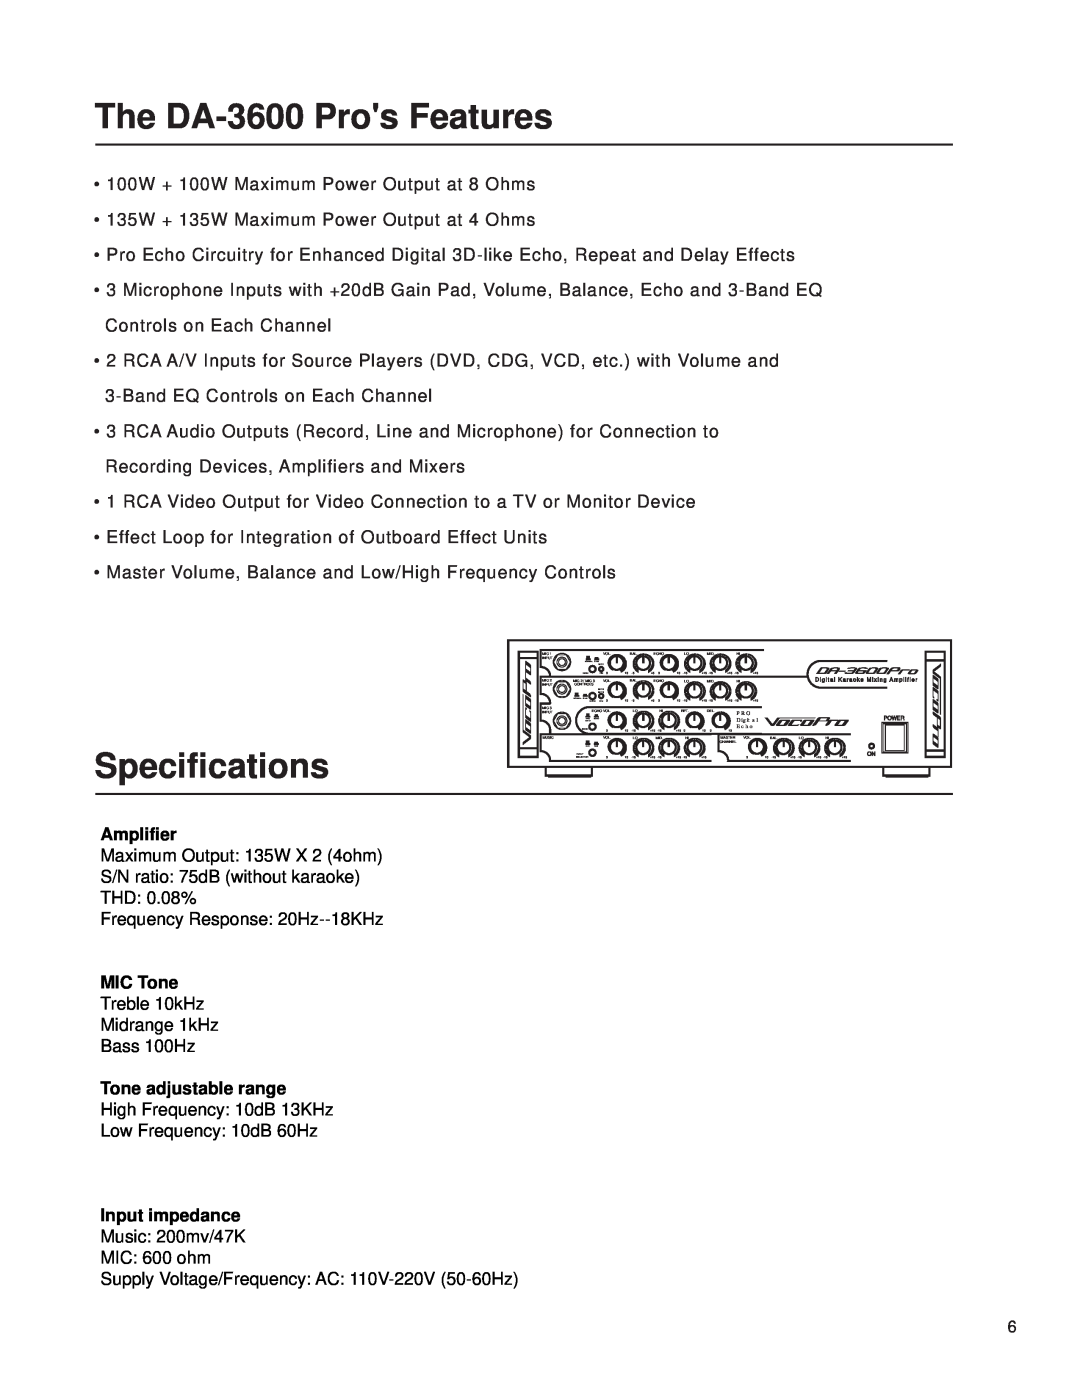 VocoPro DA-3600Pro2 owner manual The DA-3600Pros Features, Specifications, Amplifier, MIC Tone, Tone adjustable range 